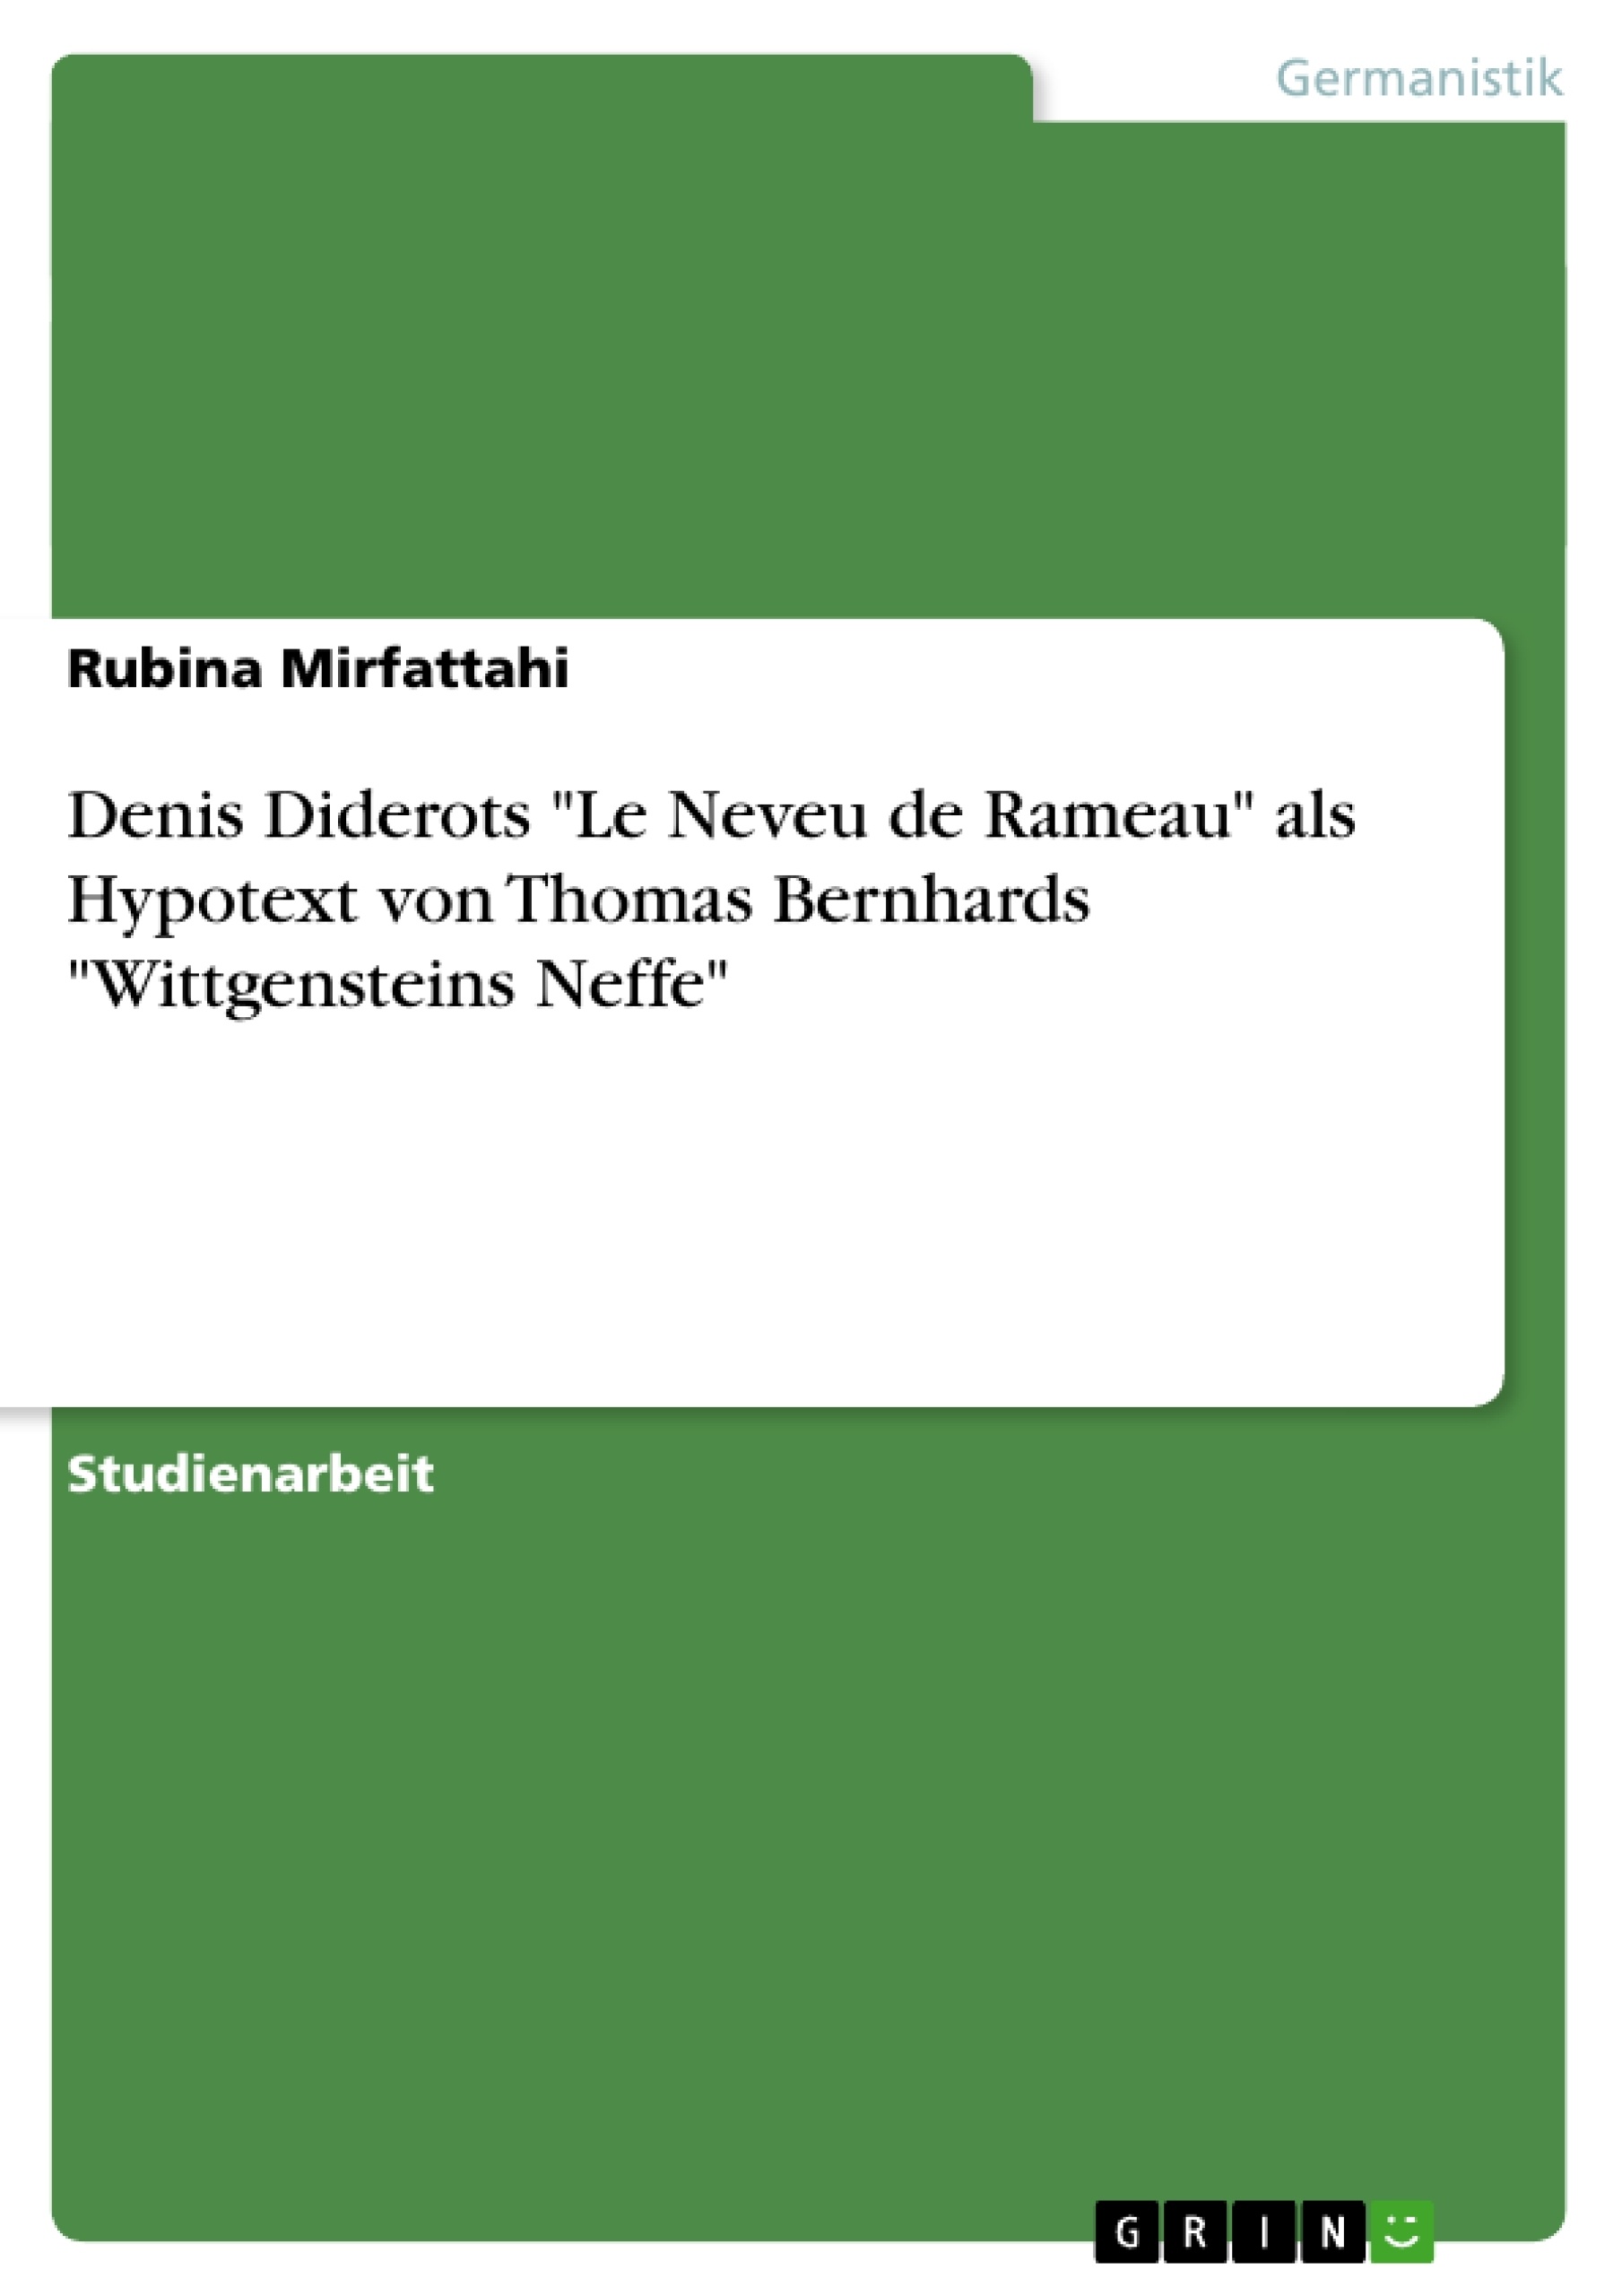 Titel: Denis Diderots "Le Neveu de Rameau" als Hypotext von Thomas Bernhards "Wittgensteins Neffe"